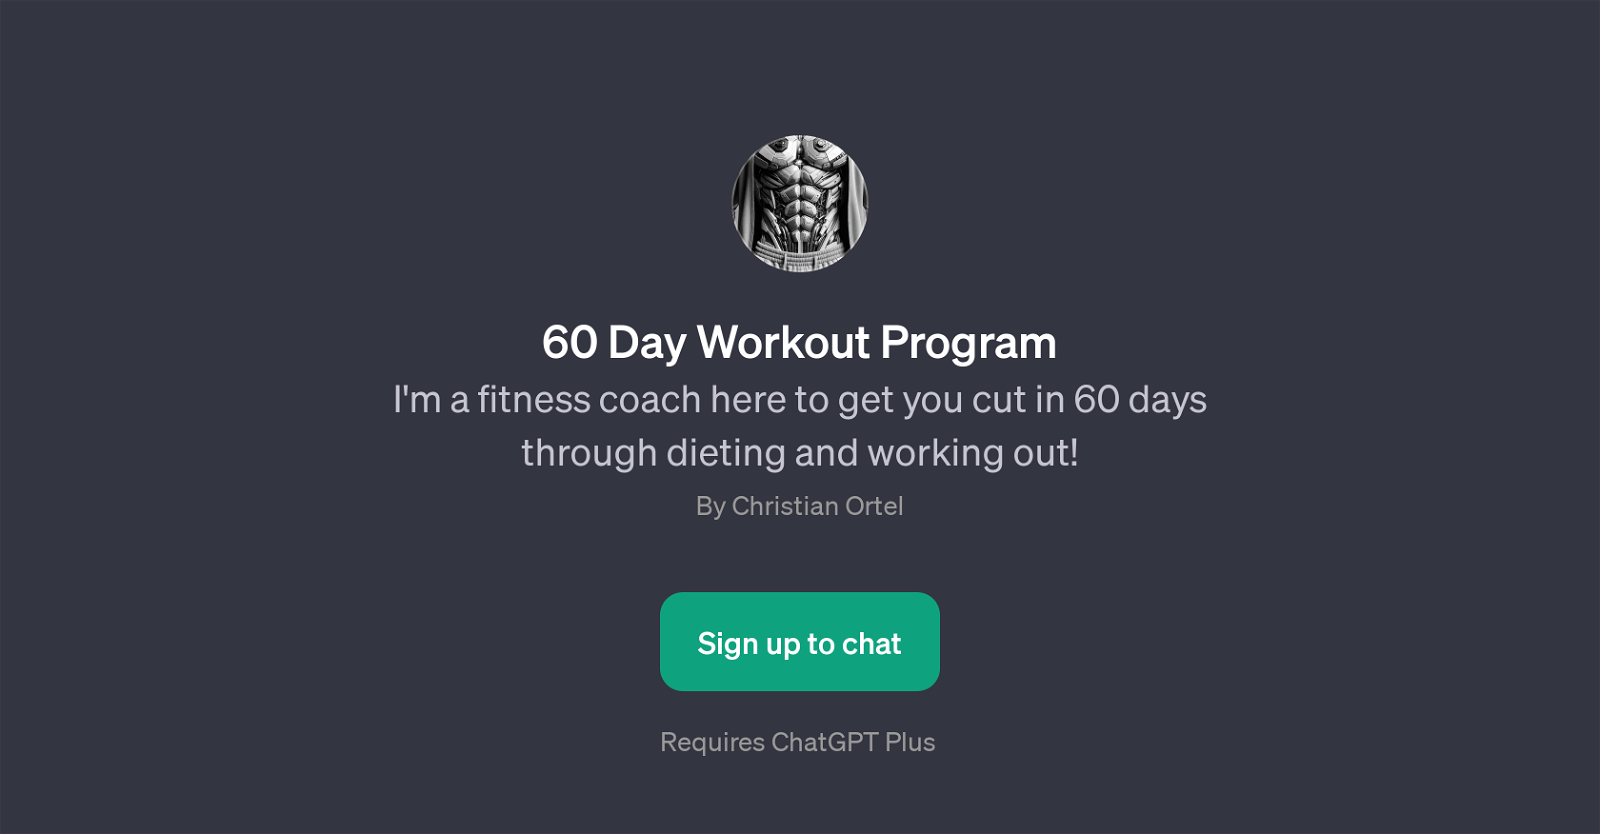 60 Day Workout Program website